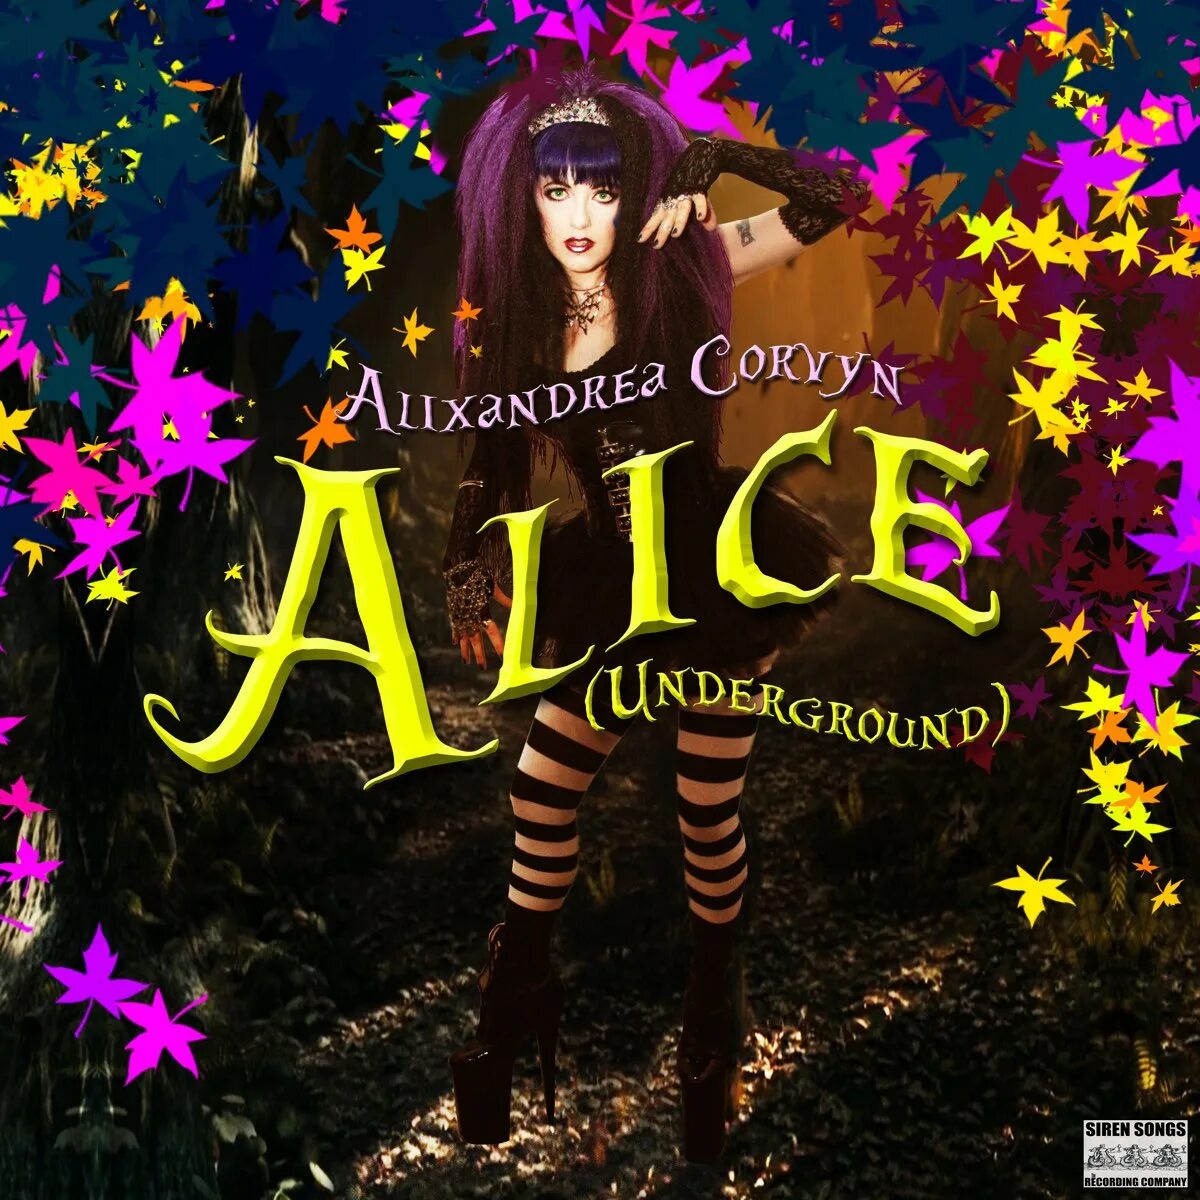 Слушать алиса без рекламы. Слушай Алиса. Алиса альбомы. Элис андеграунд. Alixandrea Corvyn.